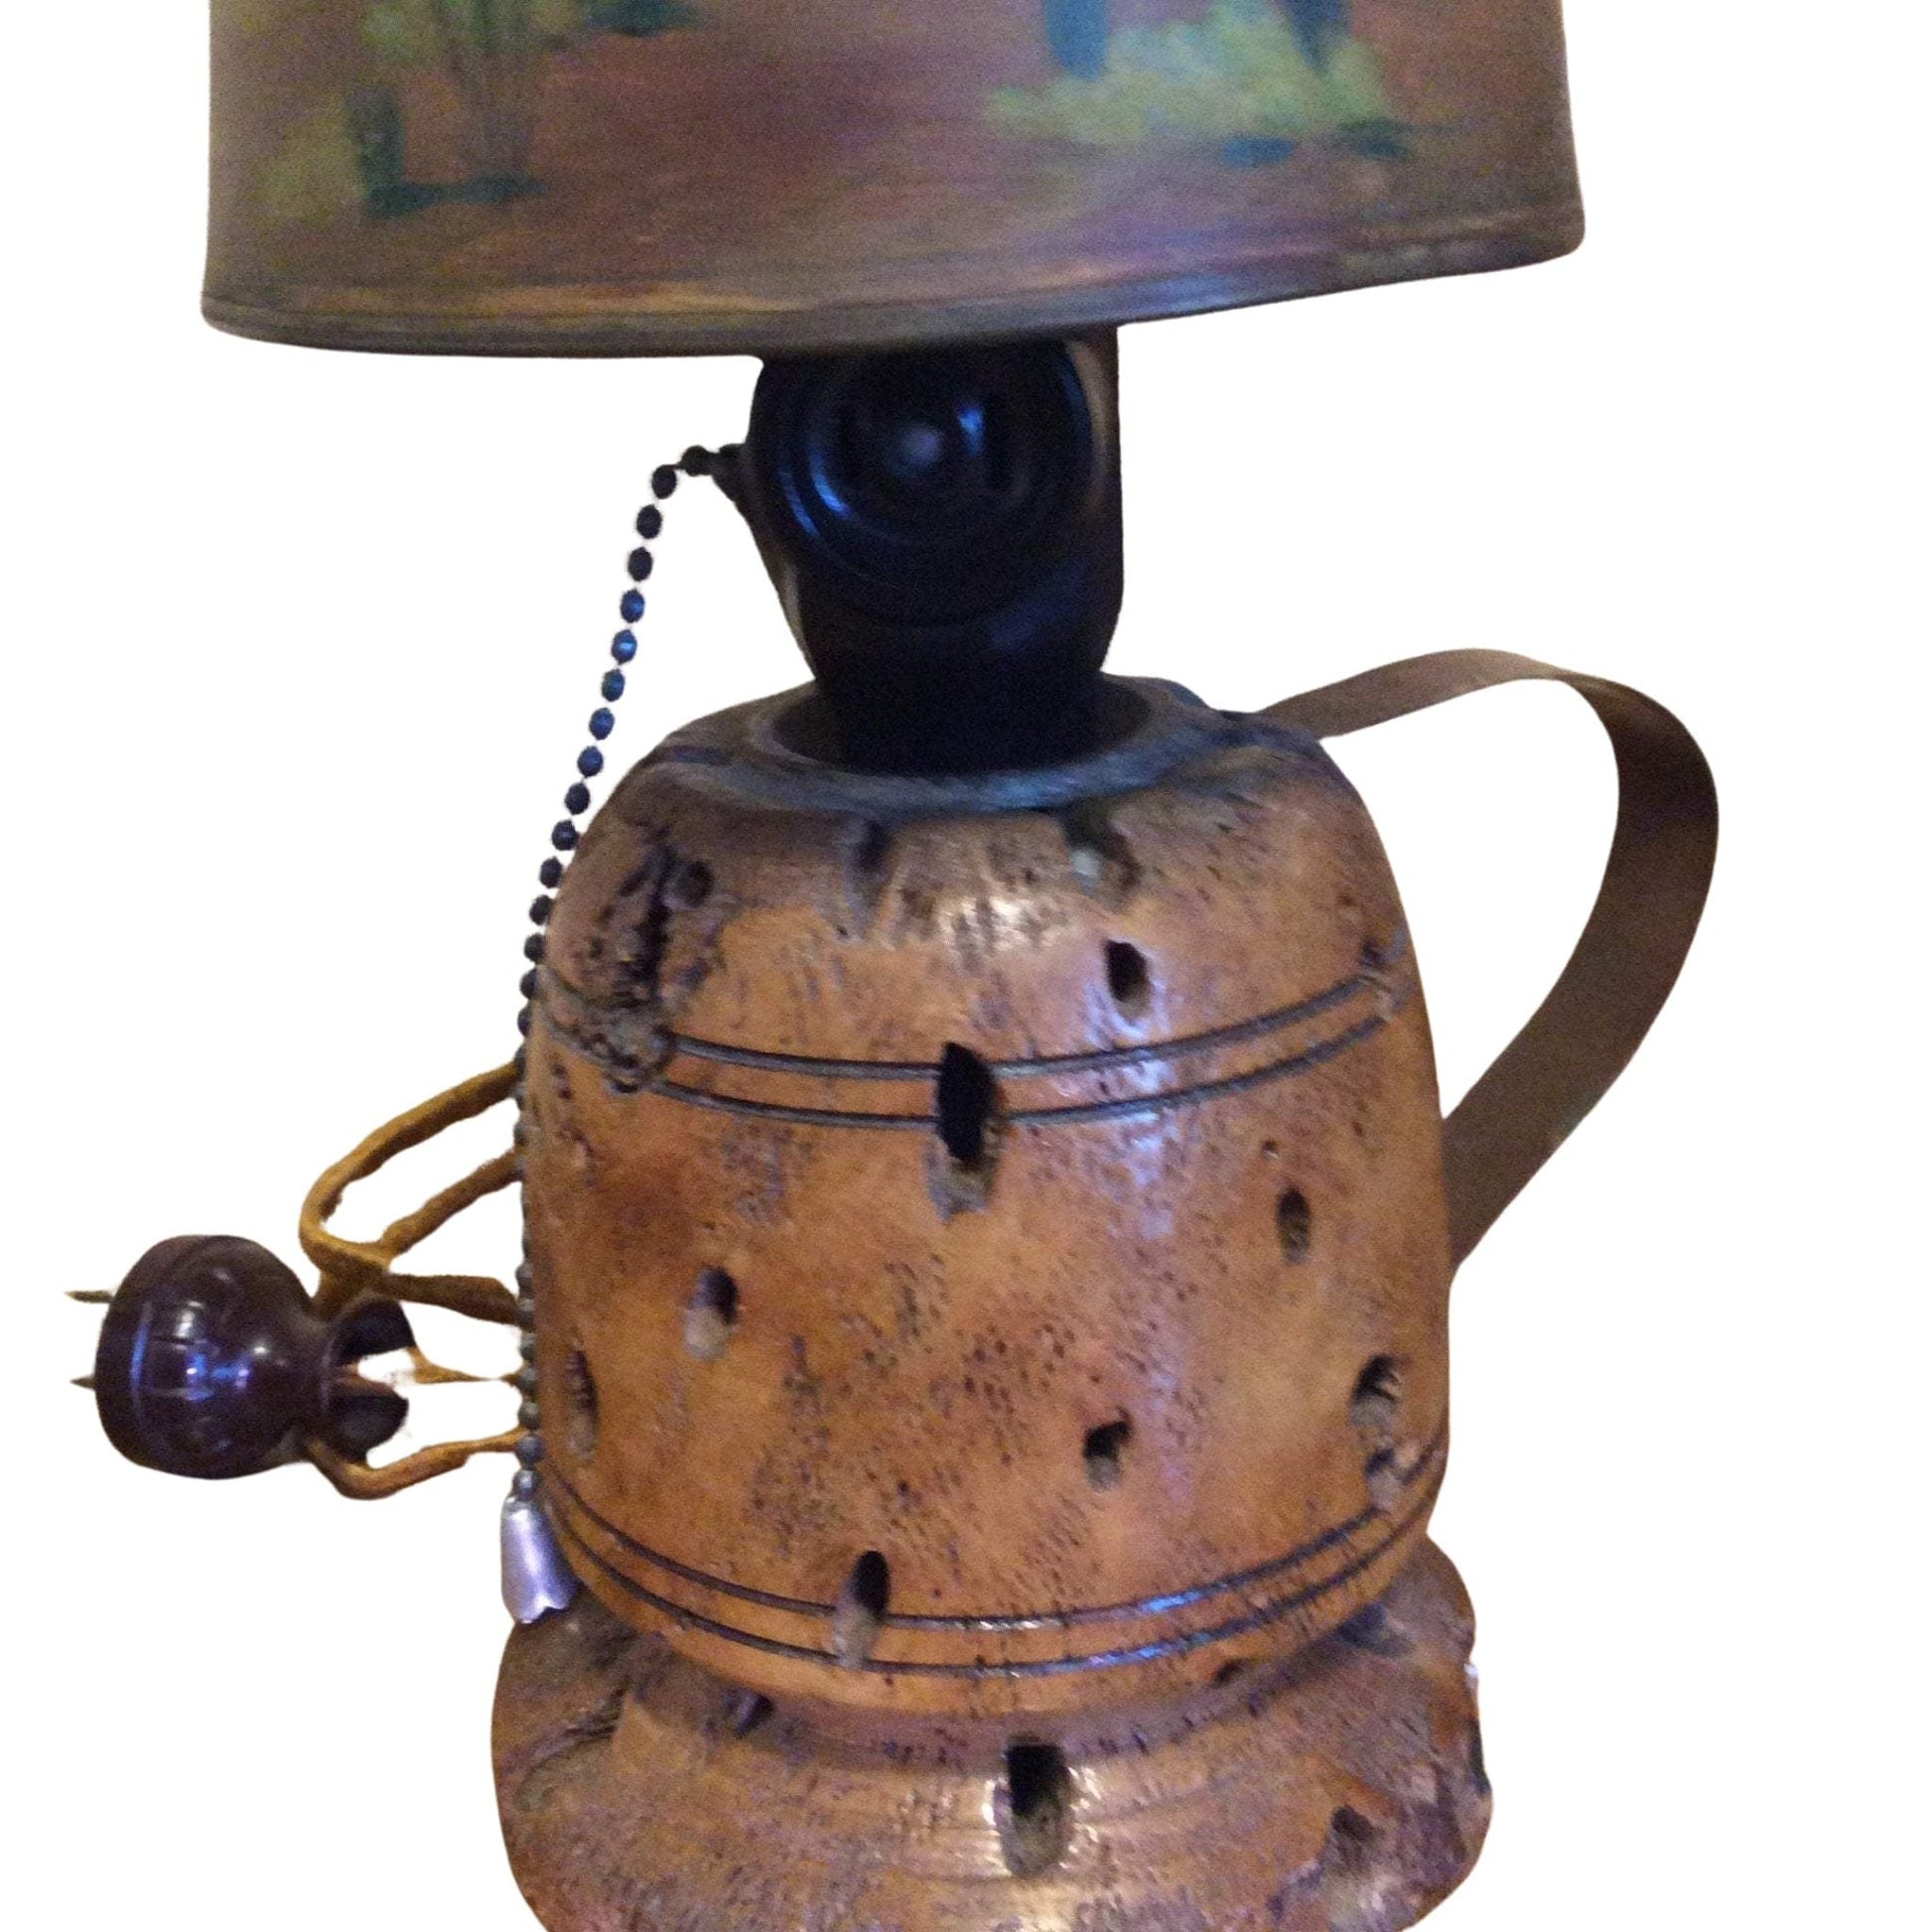 Cholla Cactus Western Lamp Multi / Wood / Vintage 1940s